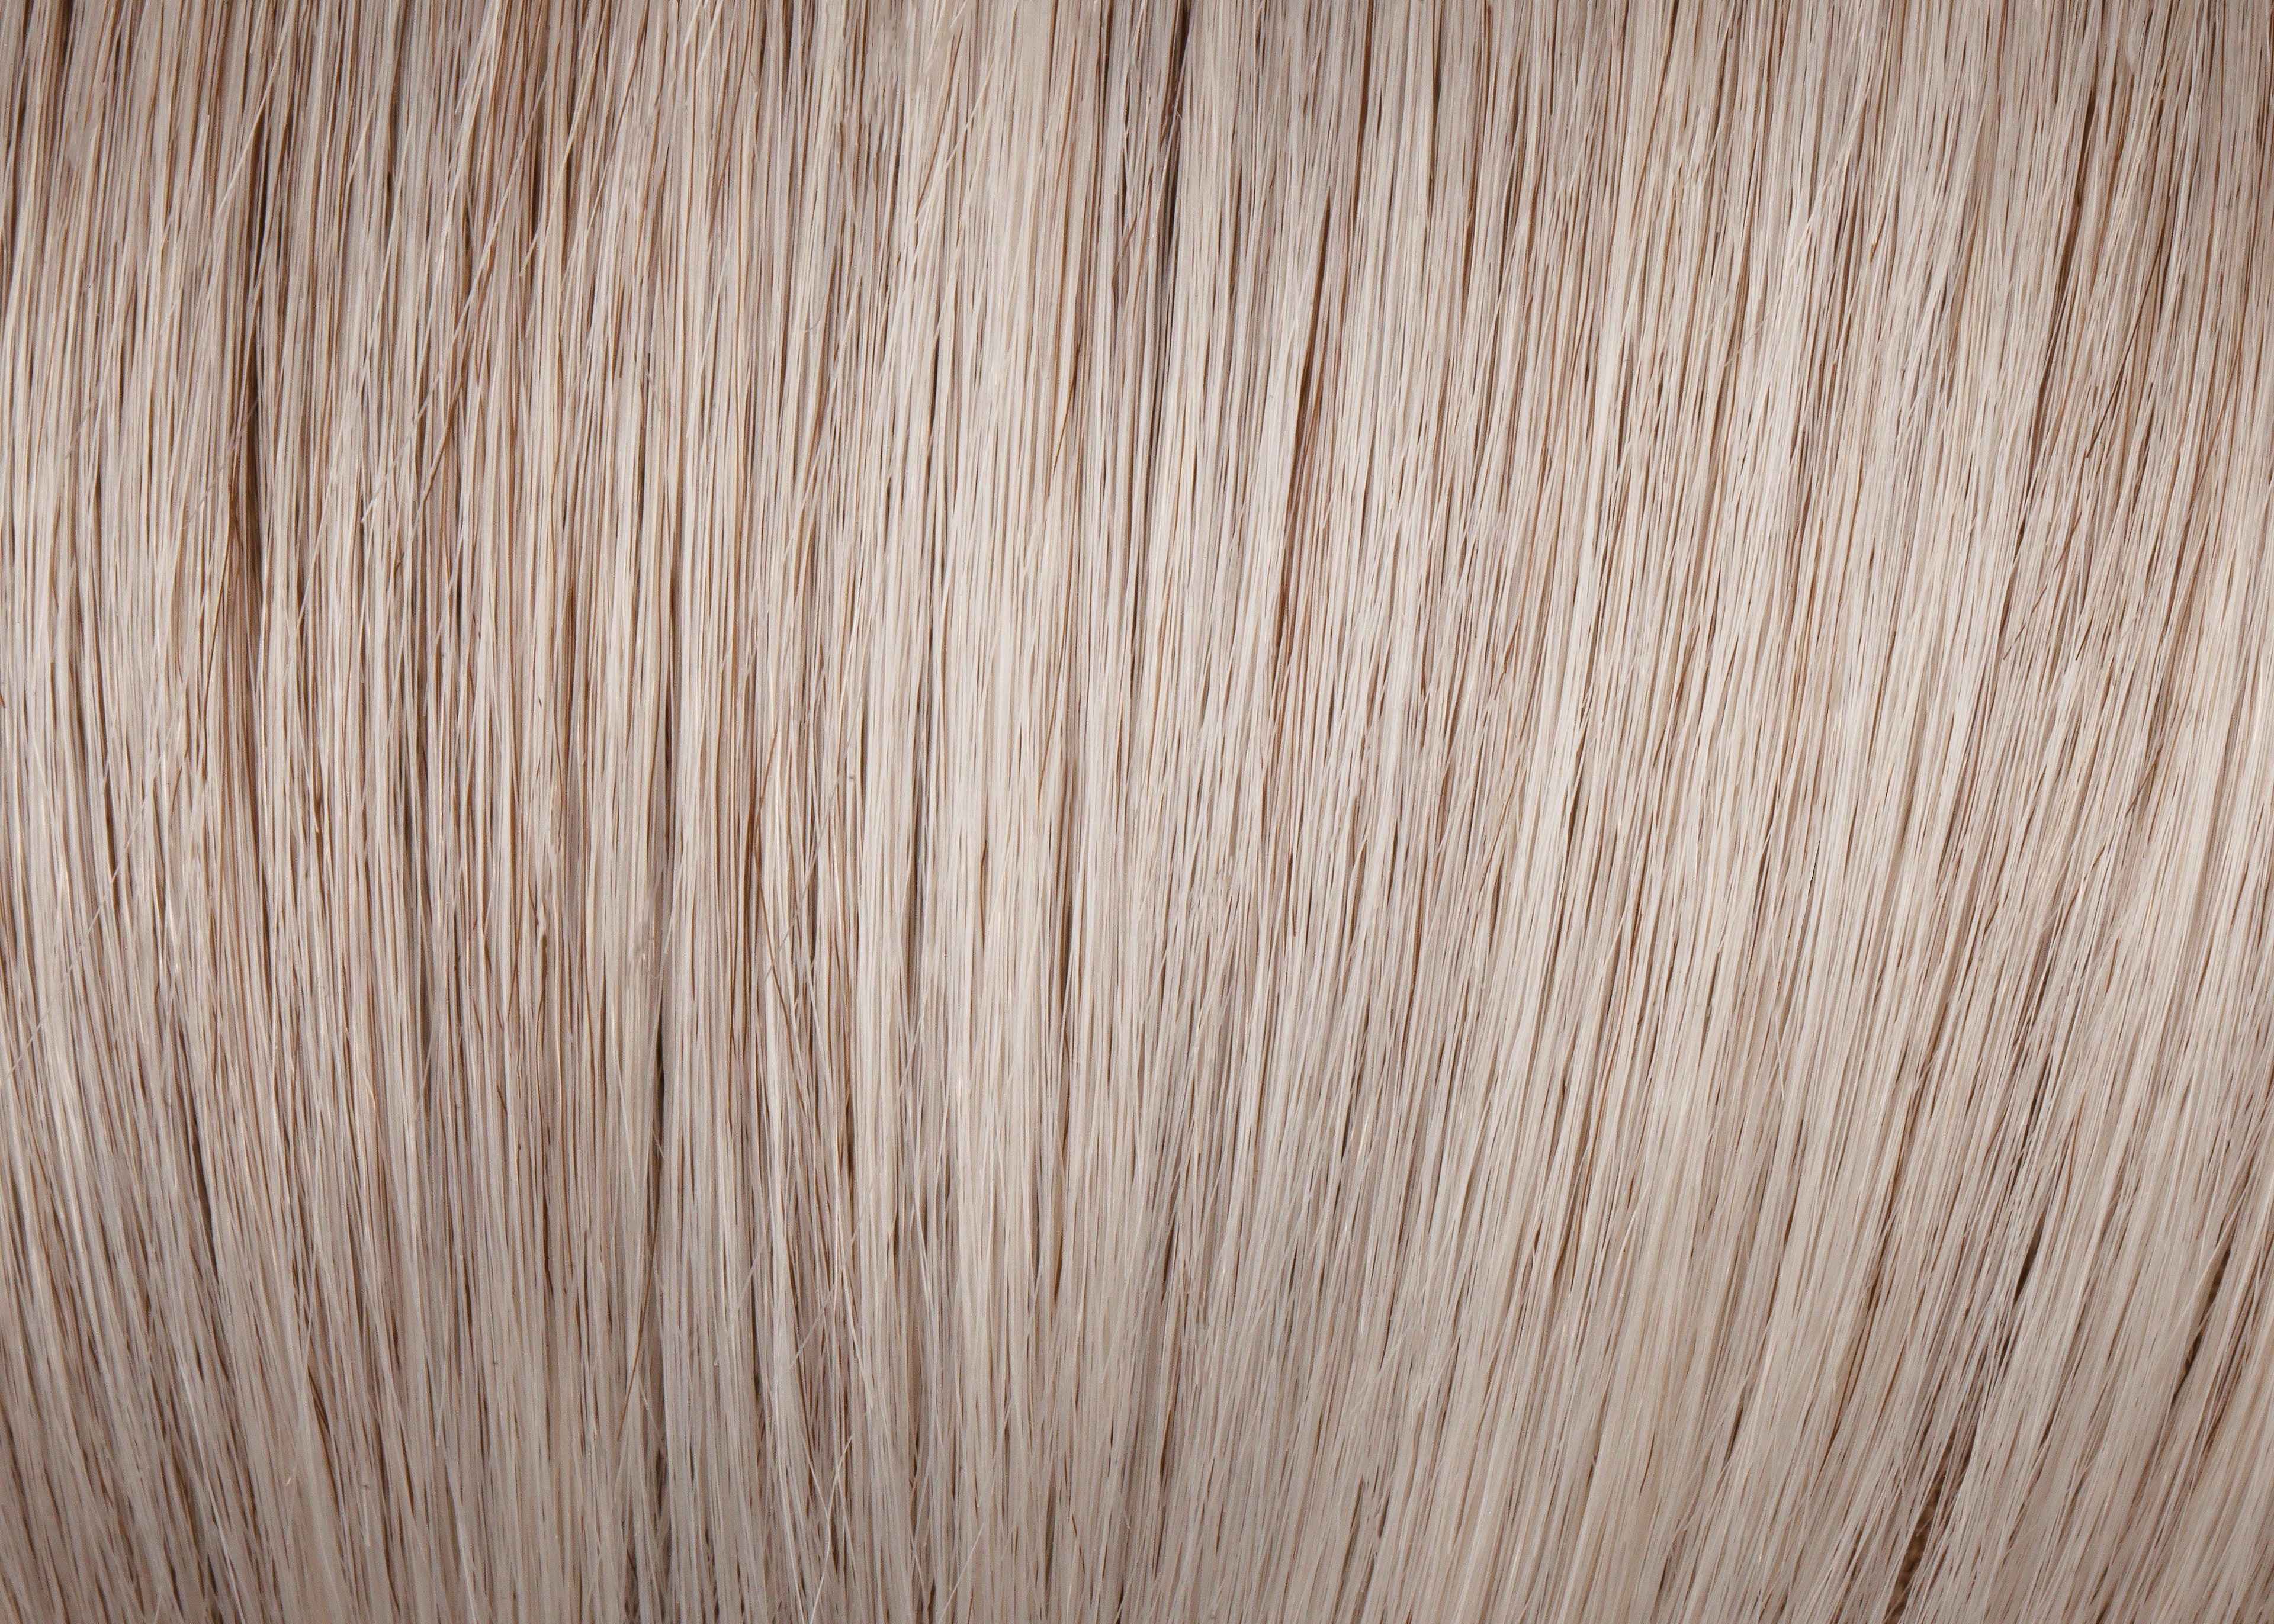 HAIRDO BY HAIR U WEAR - SHORT TEXTURED PIXIE CUT WIG